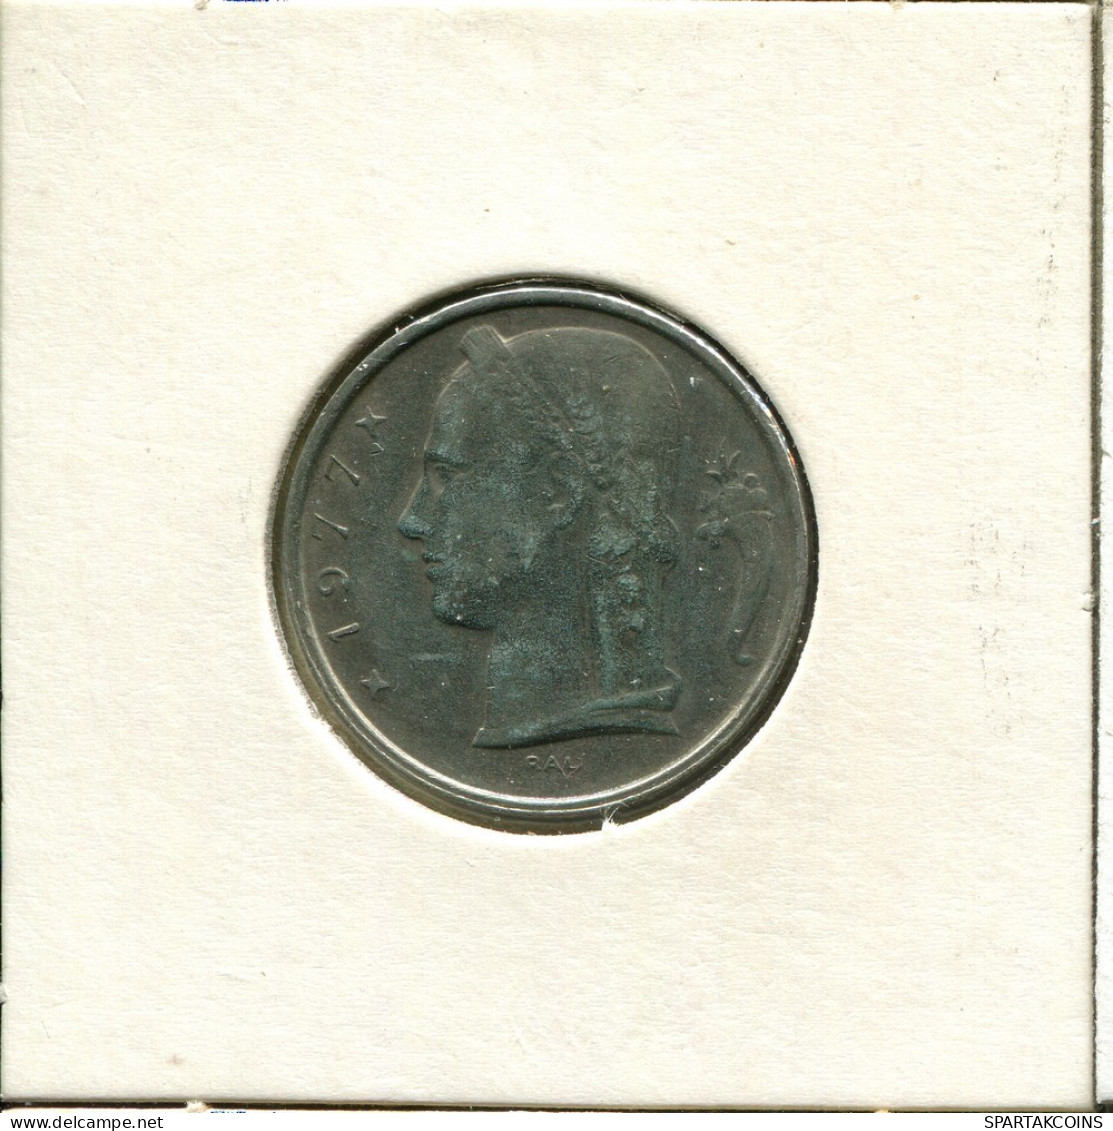 5 FRANCS 1977 FRENCH Text BELGIUM Coin #AU053.U.A - 5 Francs